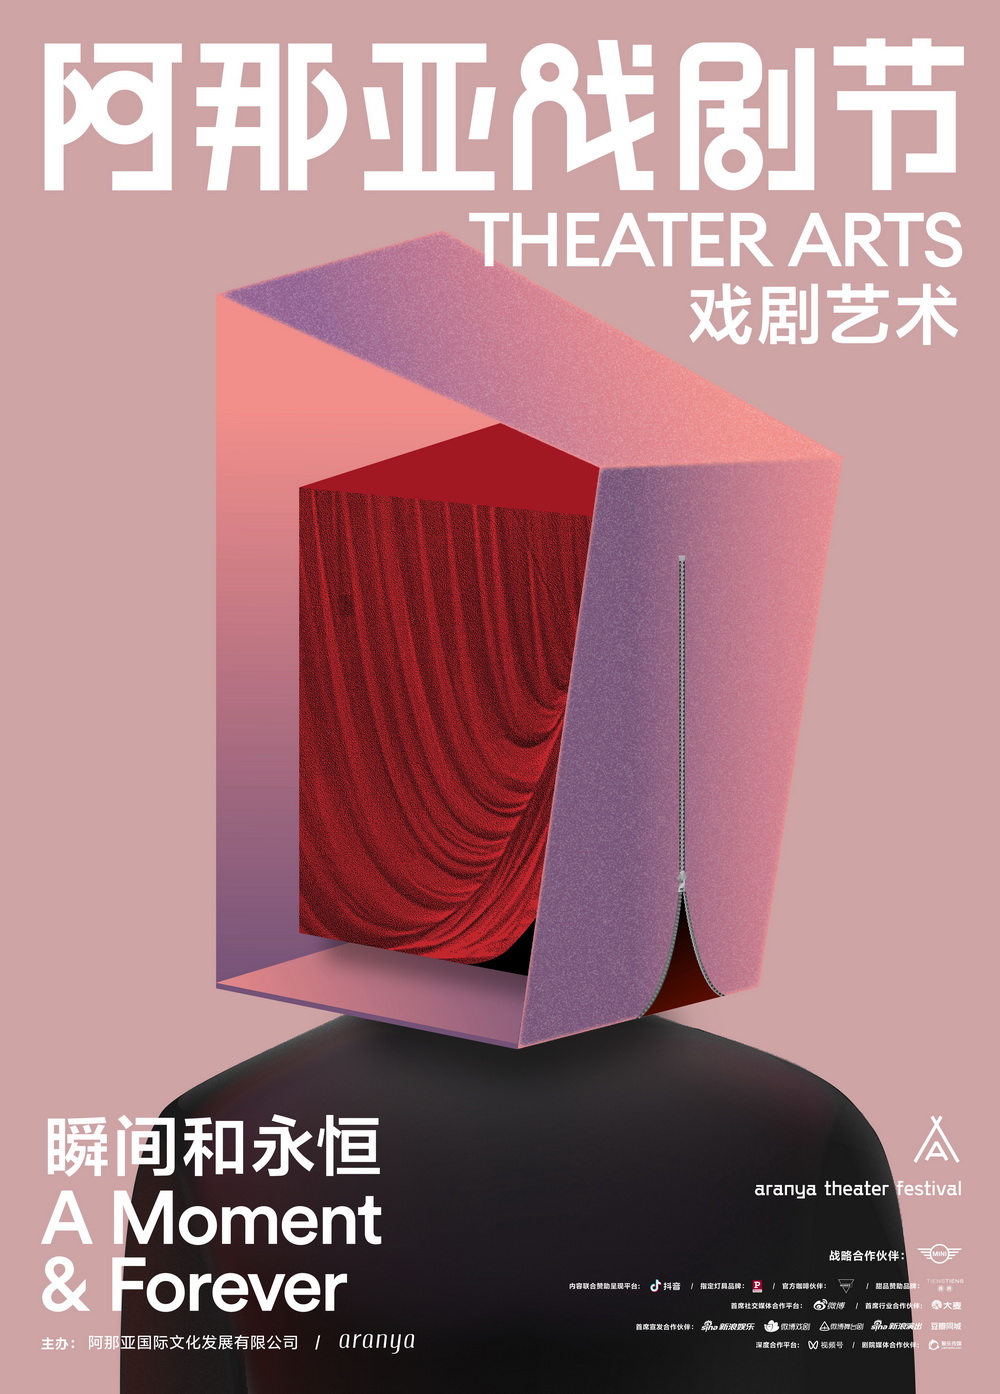 theatrical arts